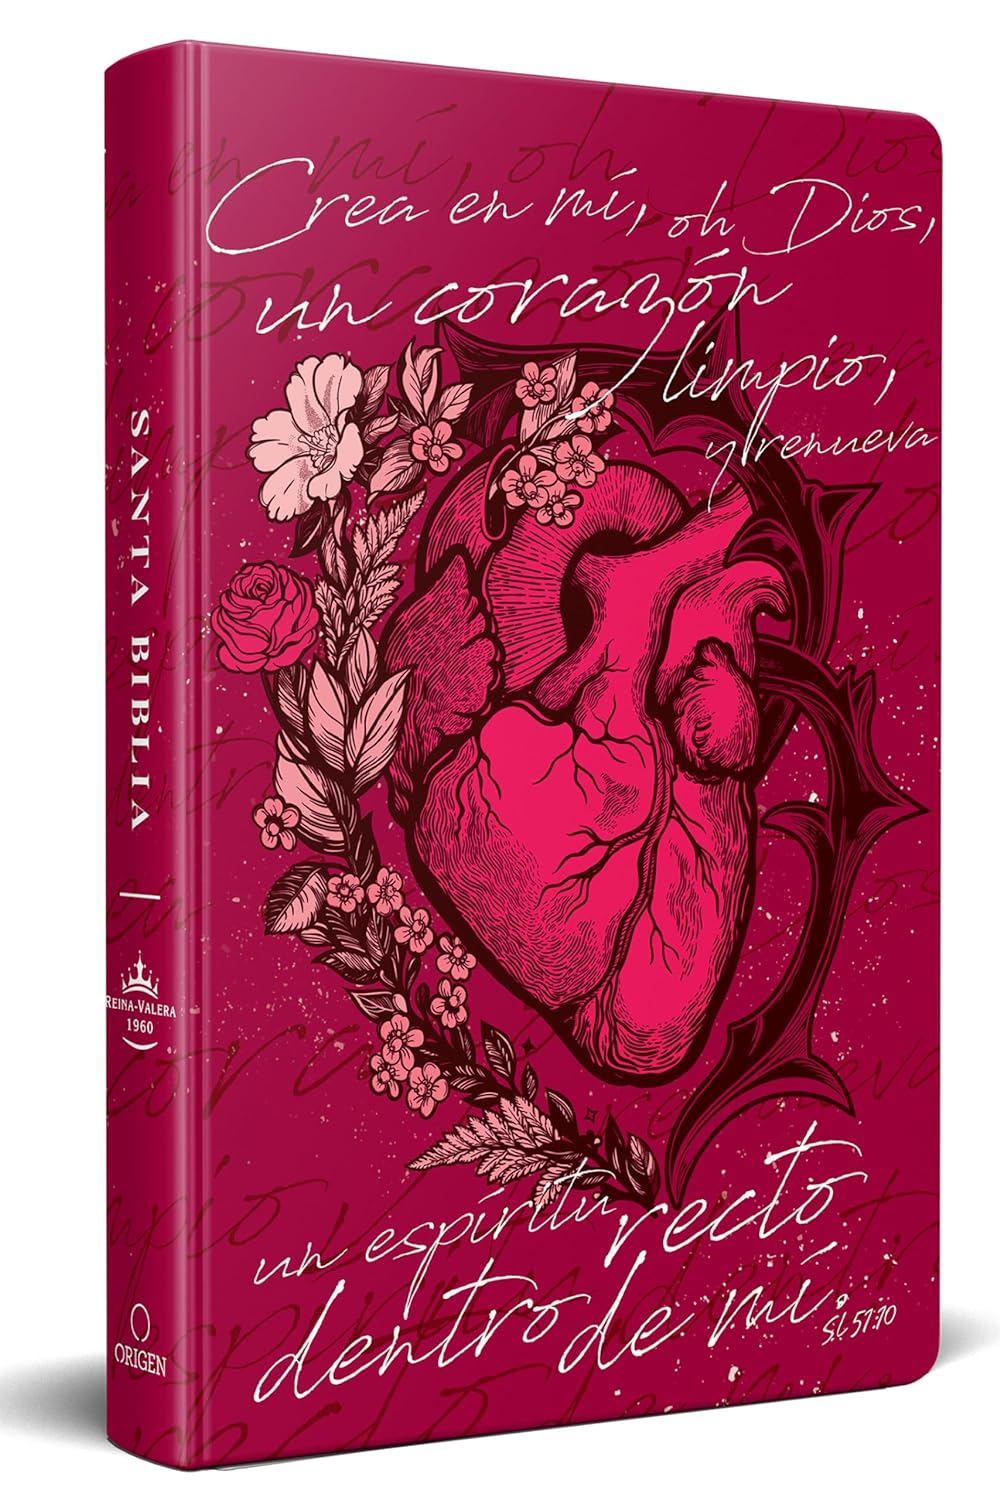 Biblia Reina Valera 1960 letra grande, tapa dura, tamaño manual corazón (rosada) / Spanish Bible RVR 1960. Handy Size, Large Print, Hardcover, Pink